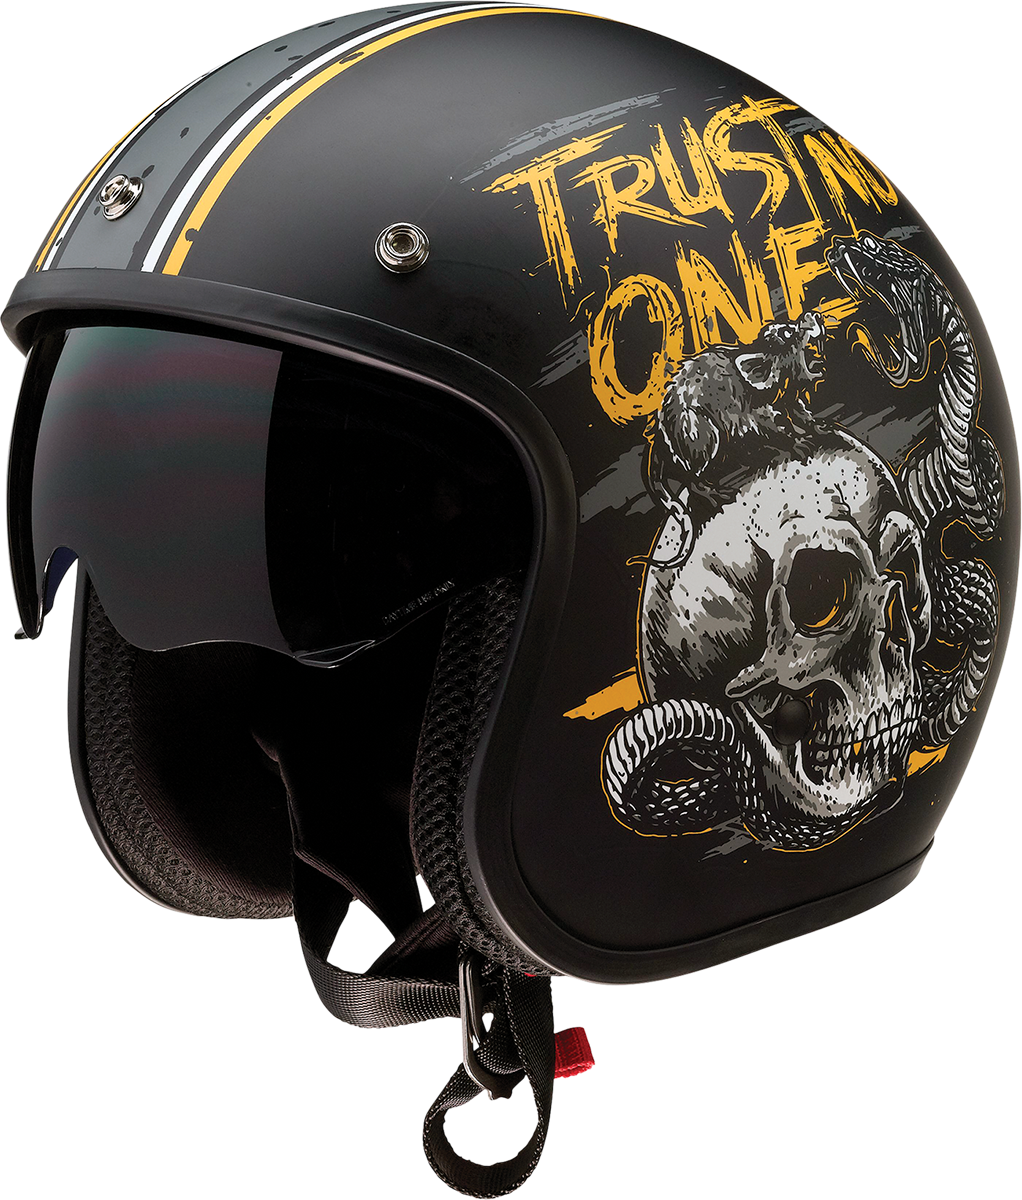 Z1R Saturn Trust No One Unisex Adult 3/4 Motorcycle Riding Street Helmet